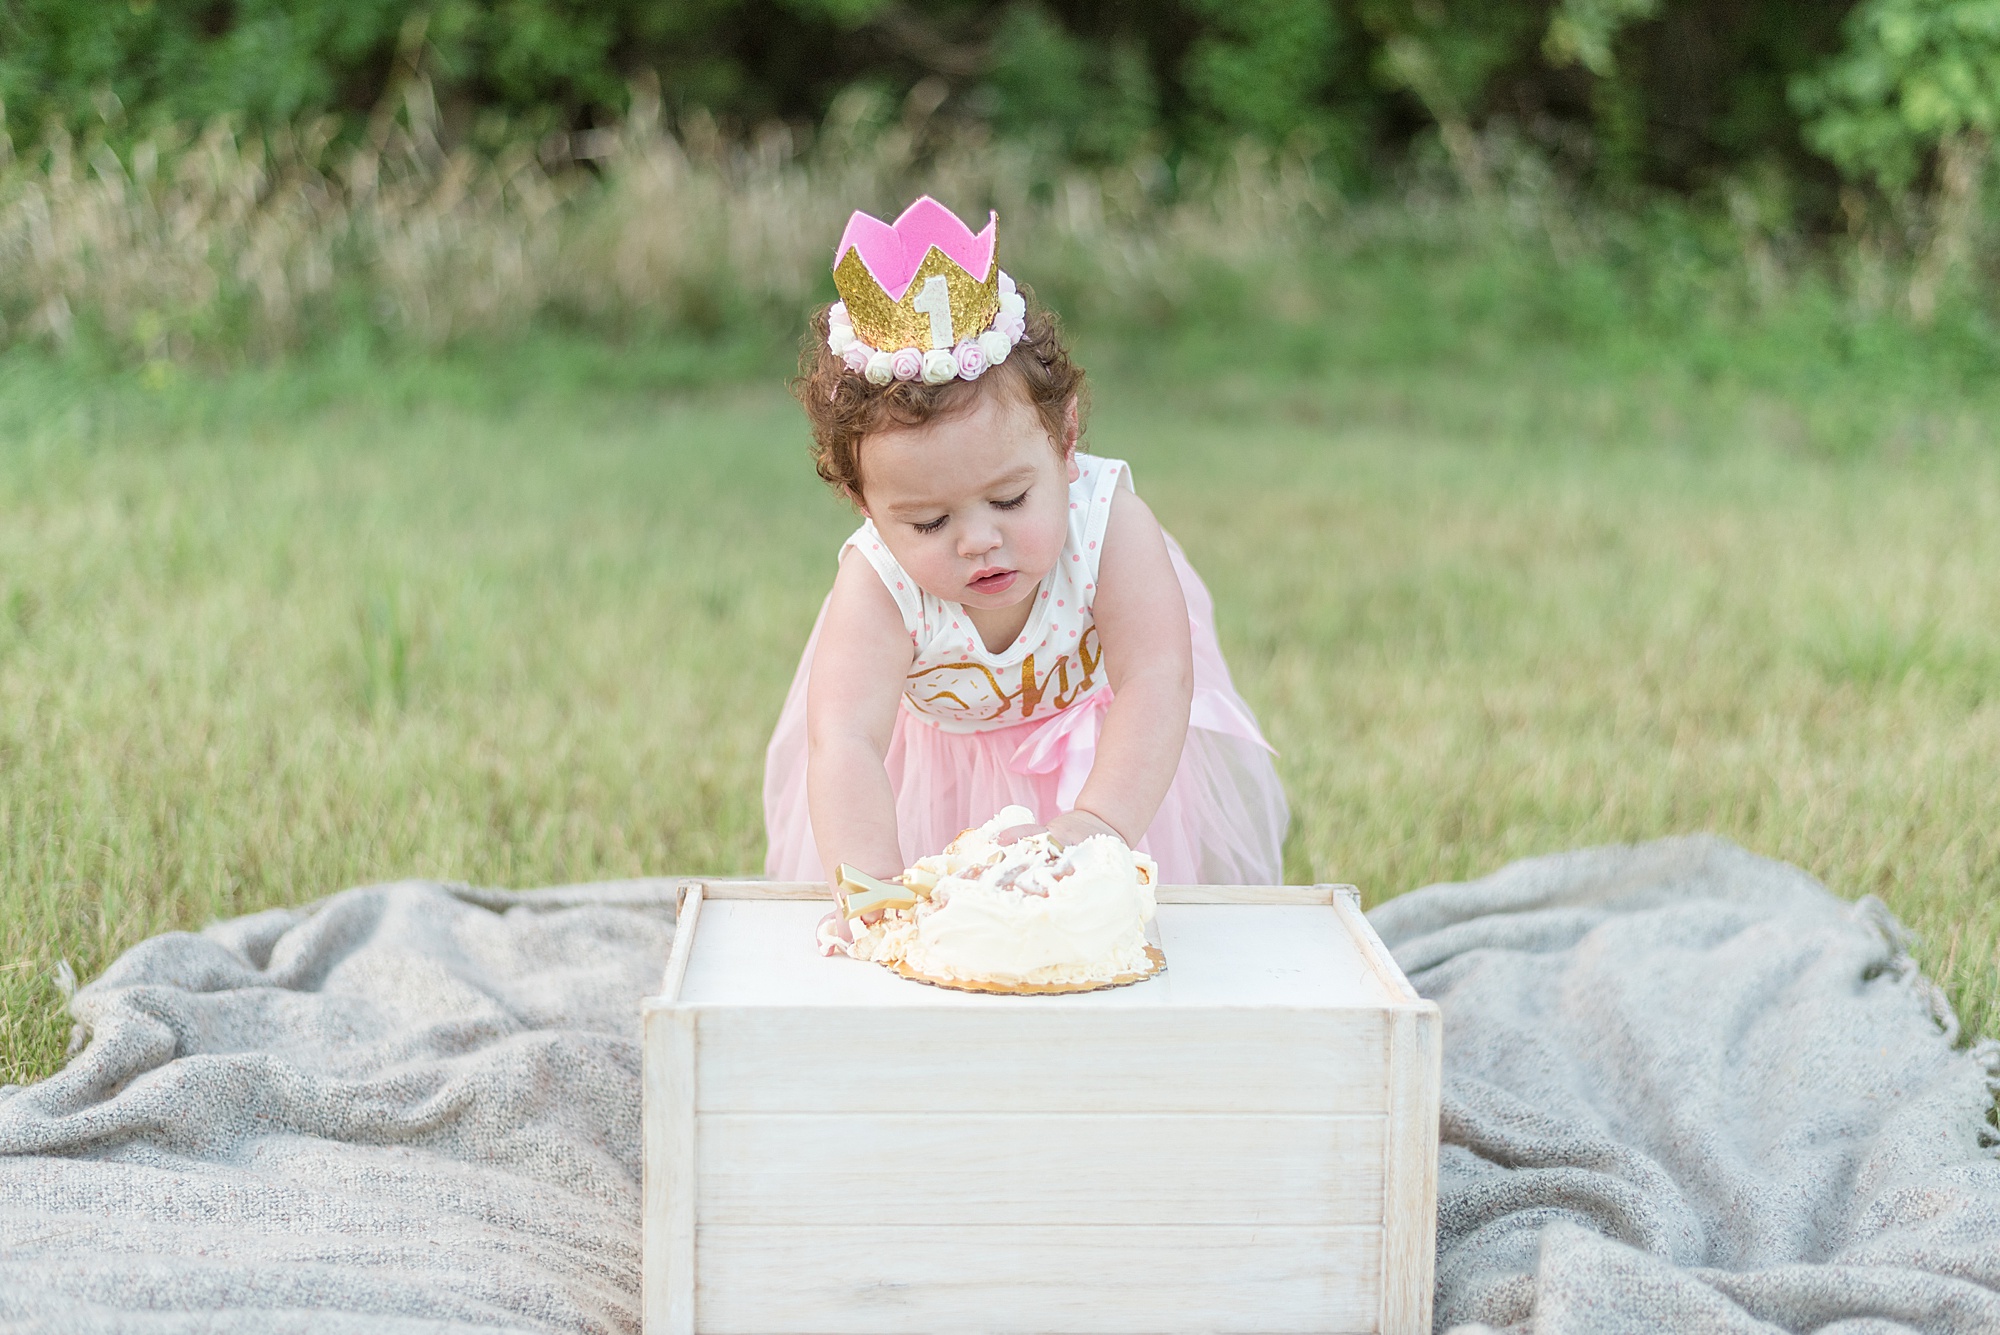 birthday girl takes her first bite of birthday cake